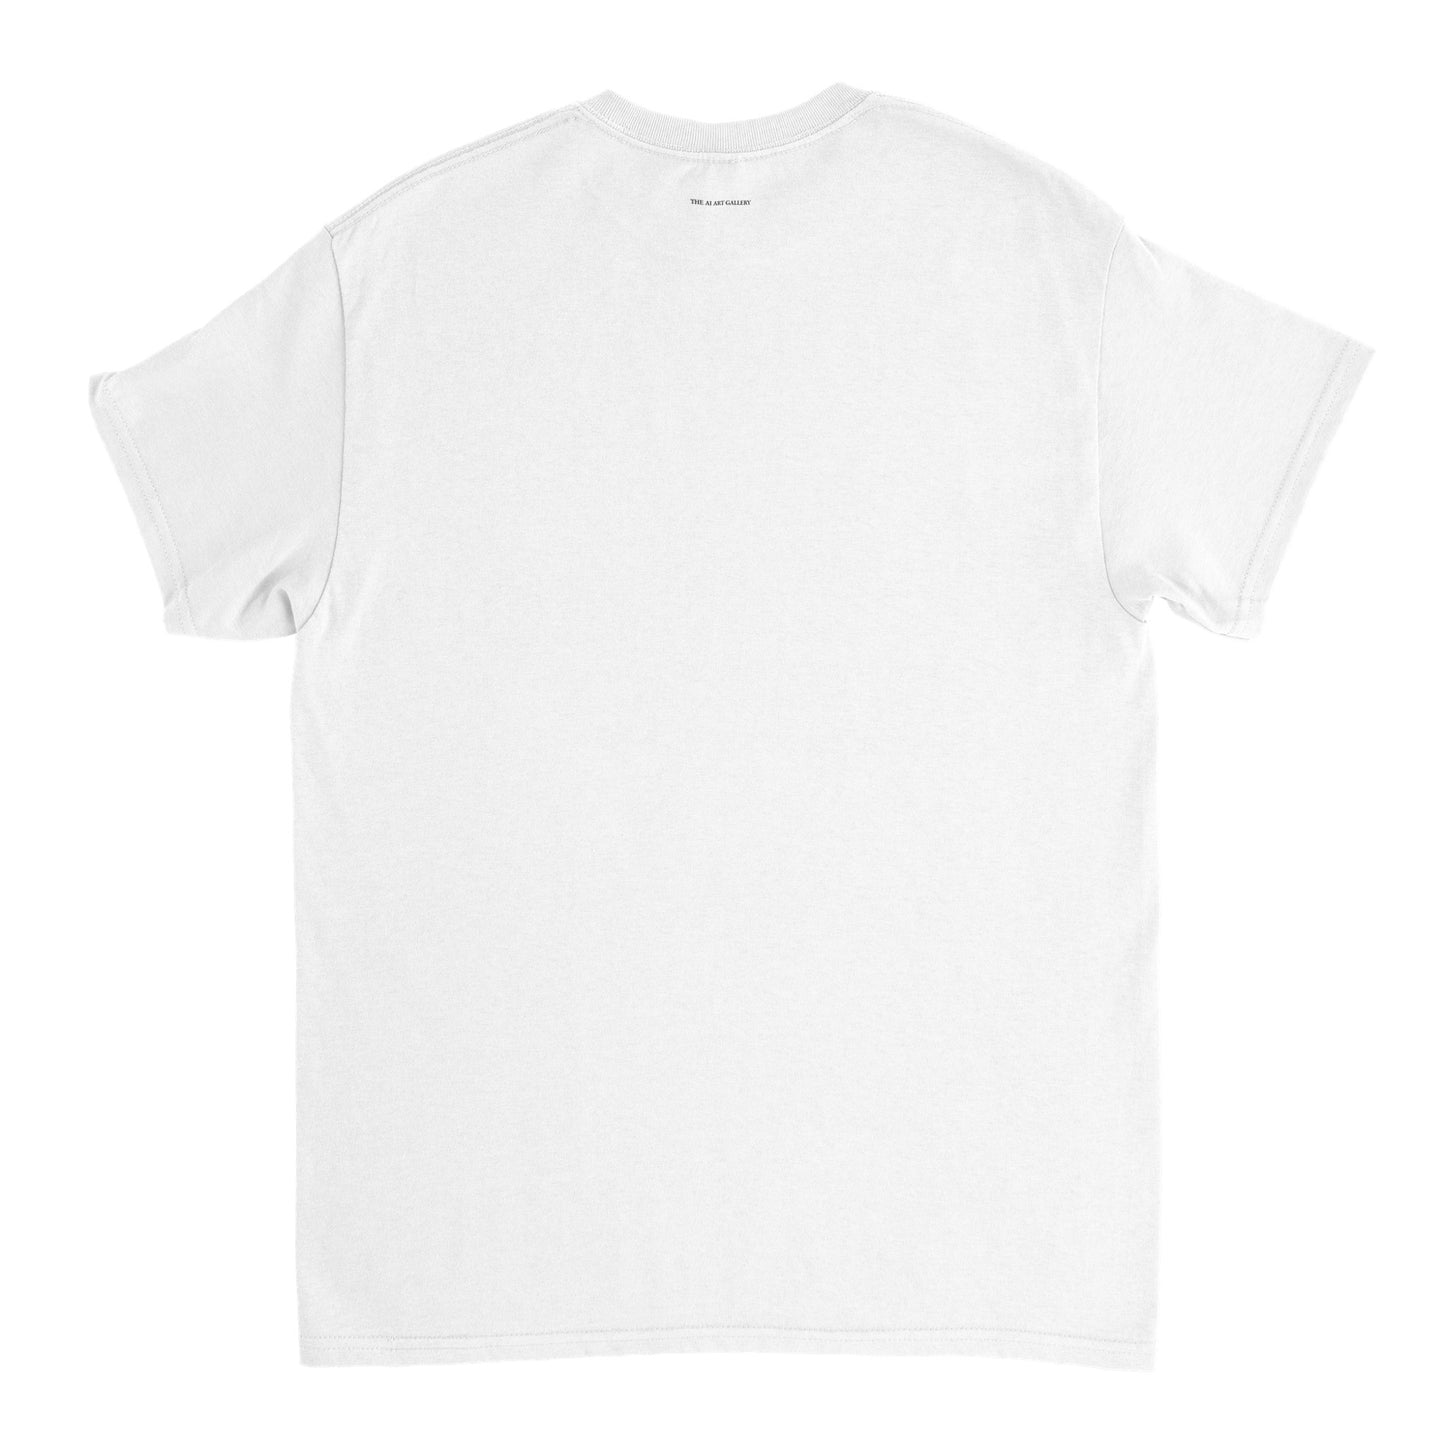 fortis / SS23 / T-shirt / white